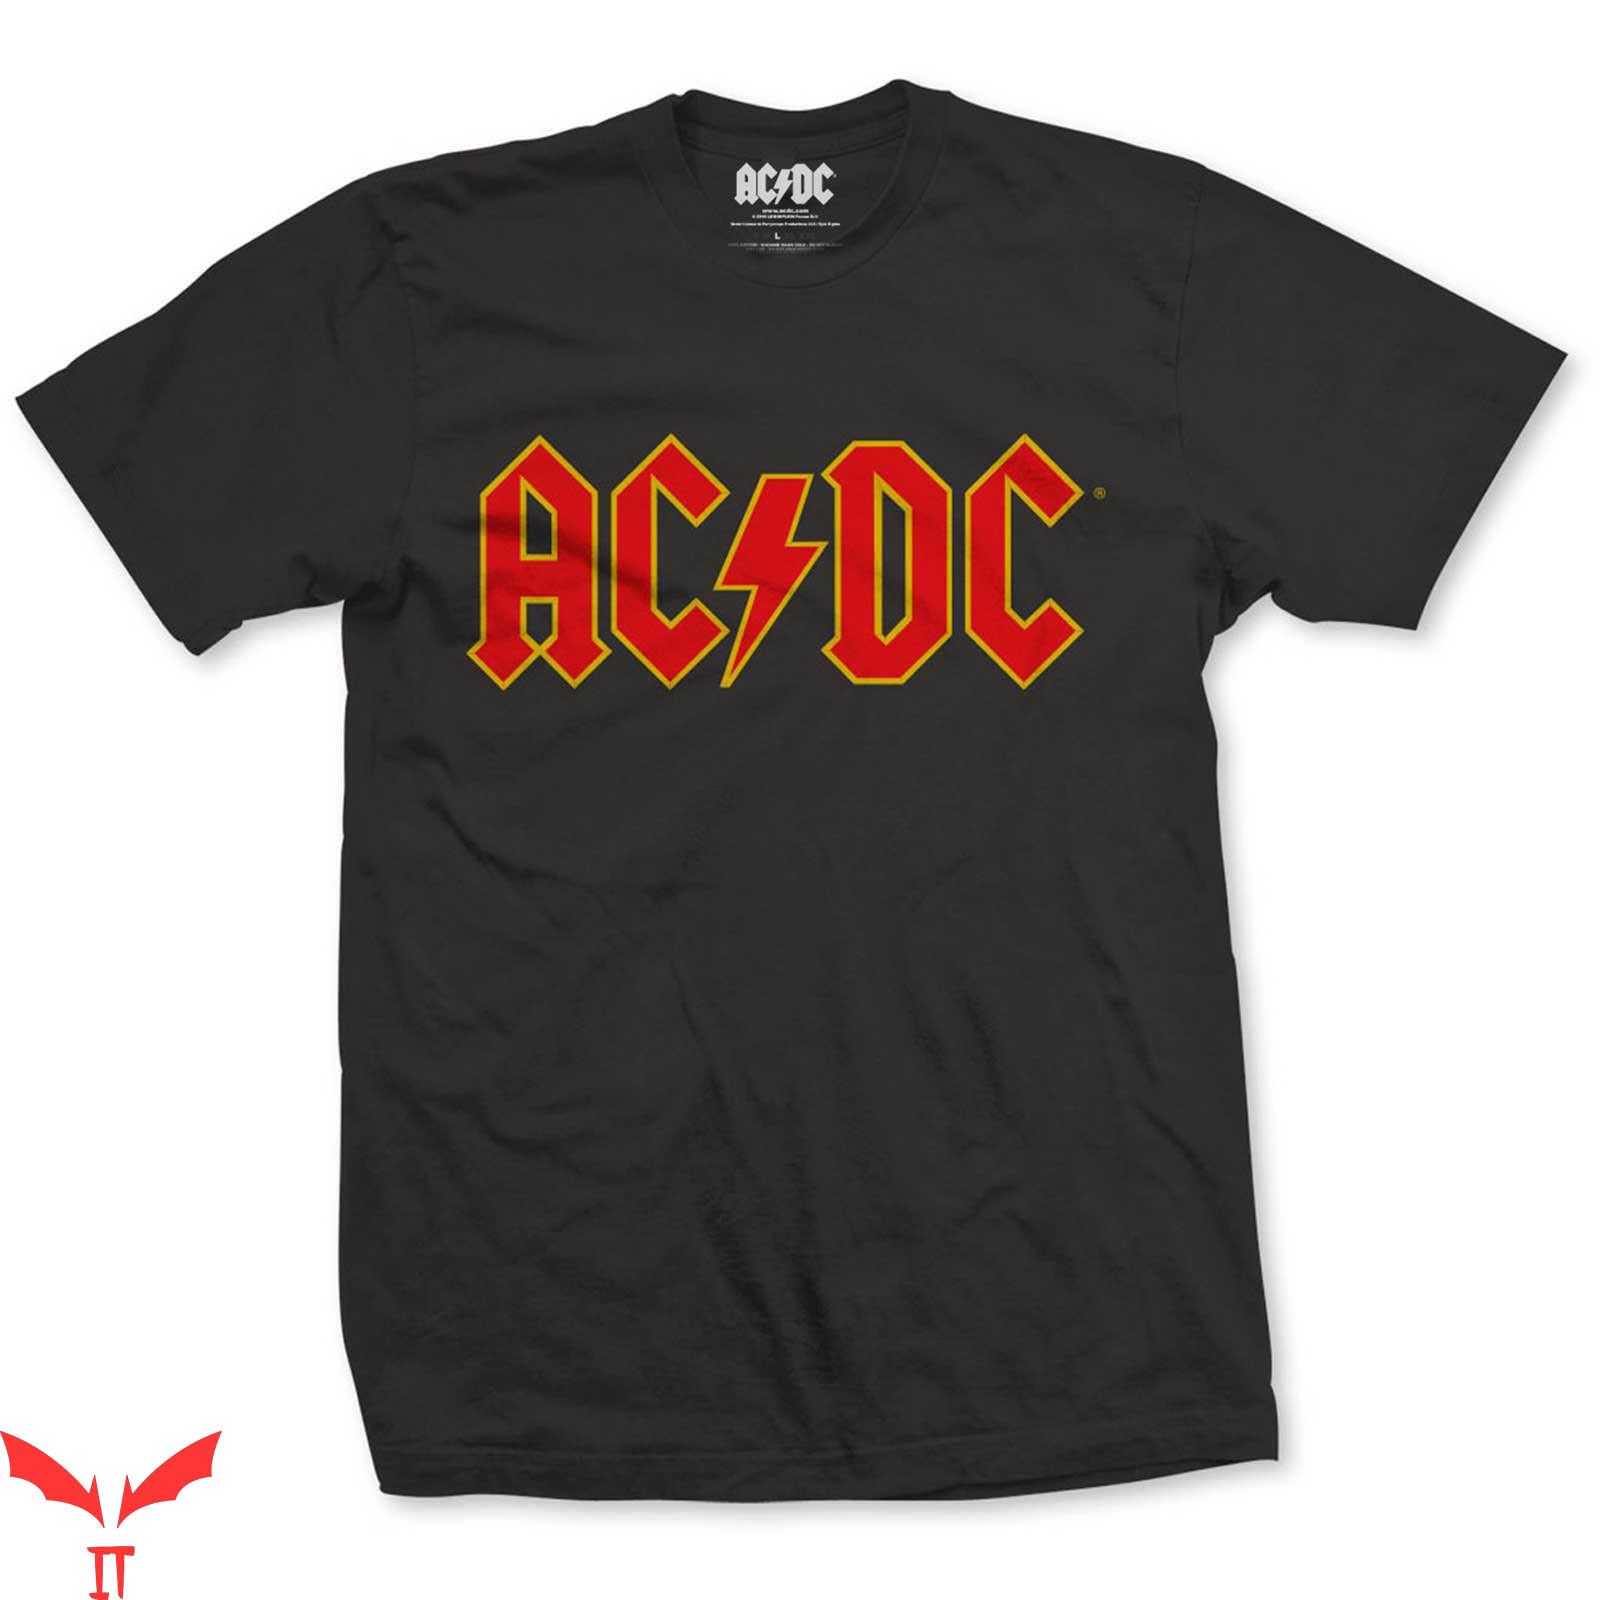 AC DC Back In Black T-Shirt Heavy Metal Rock Band Logo Tee